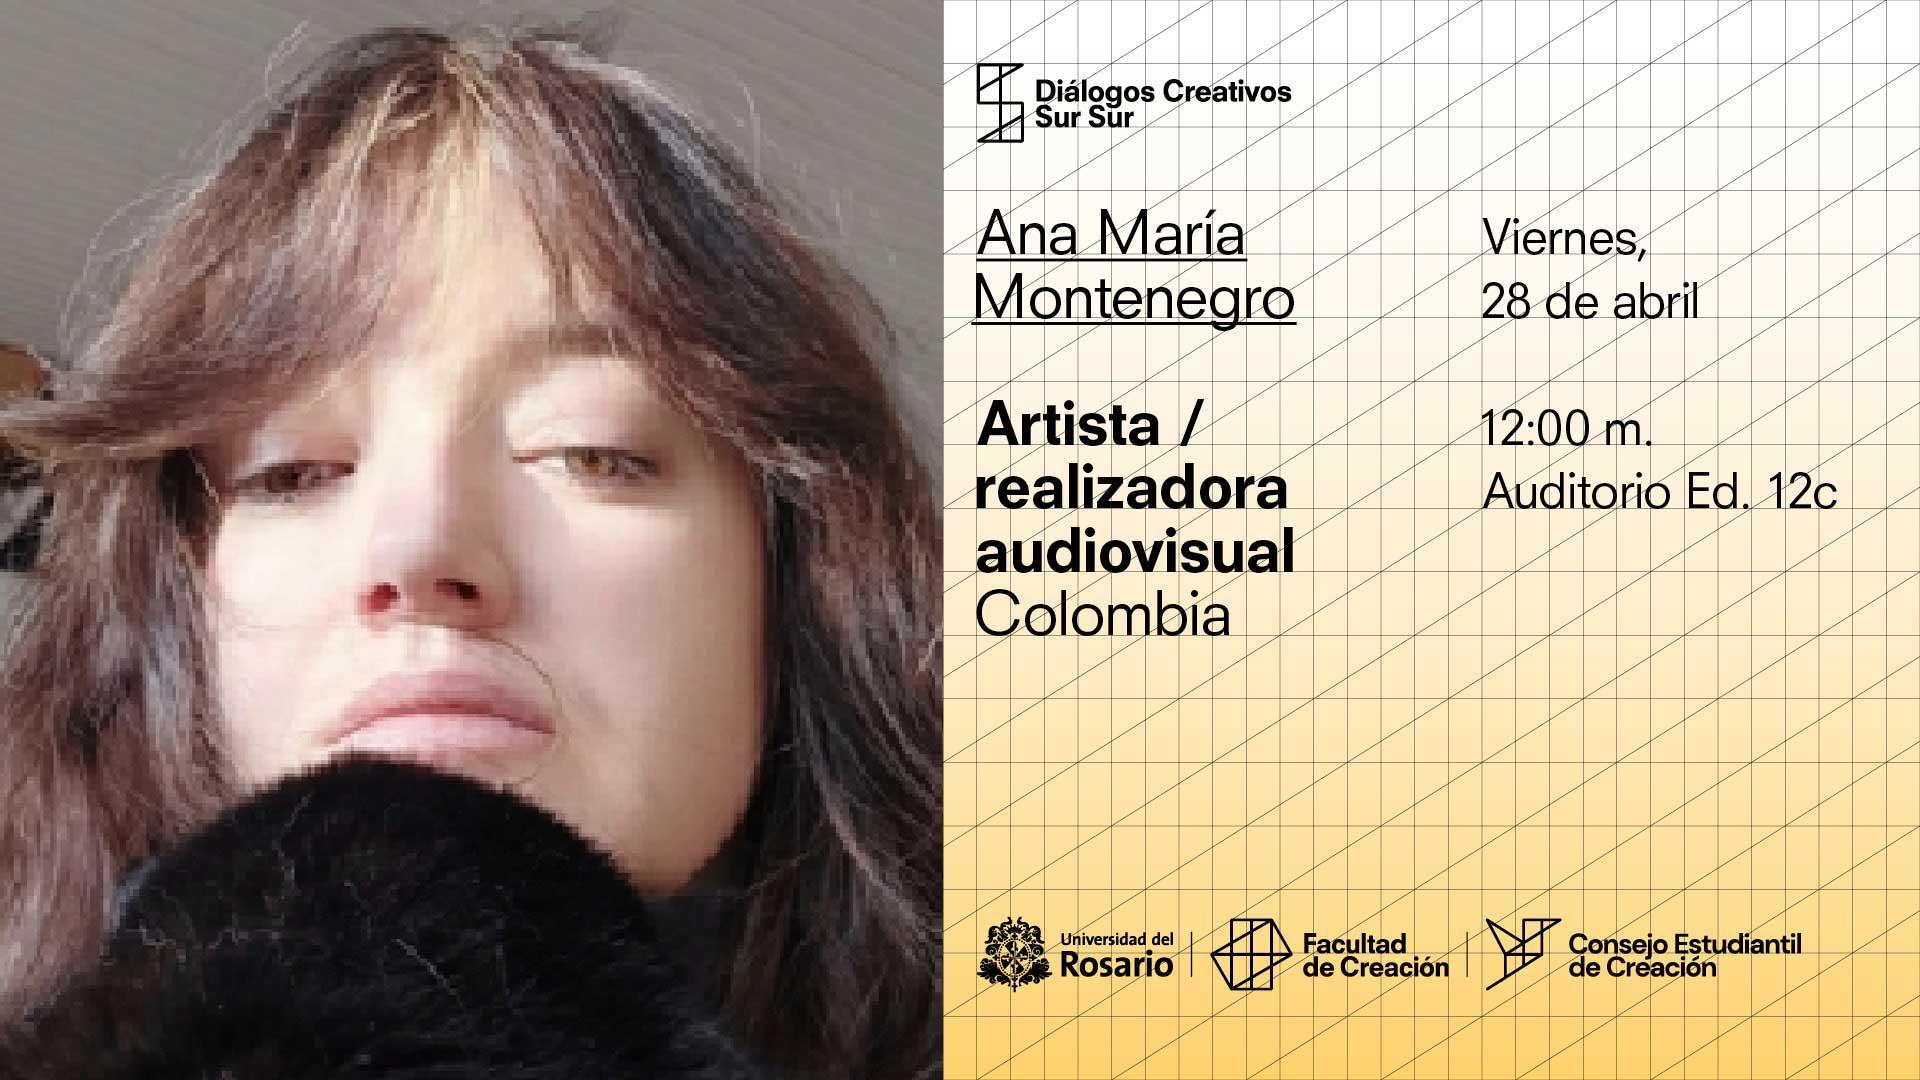 Diálogos Creativos Sur Sur: Ana María Montenegro, Colombia